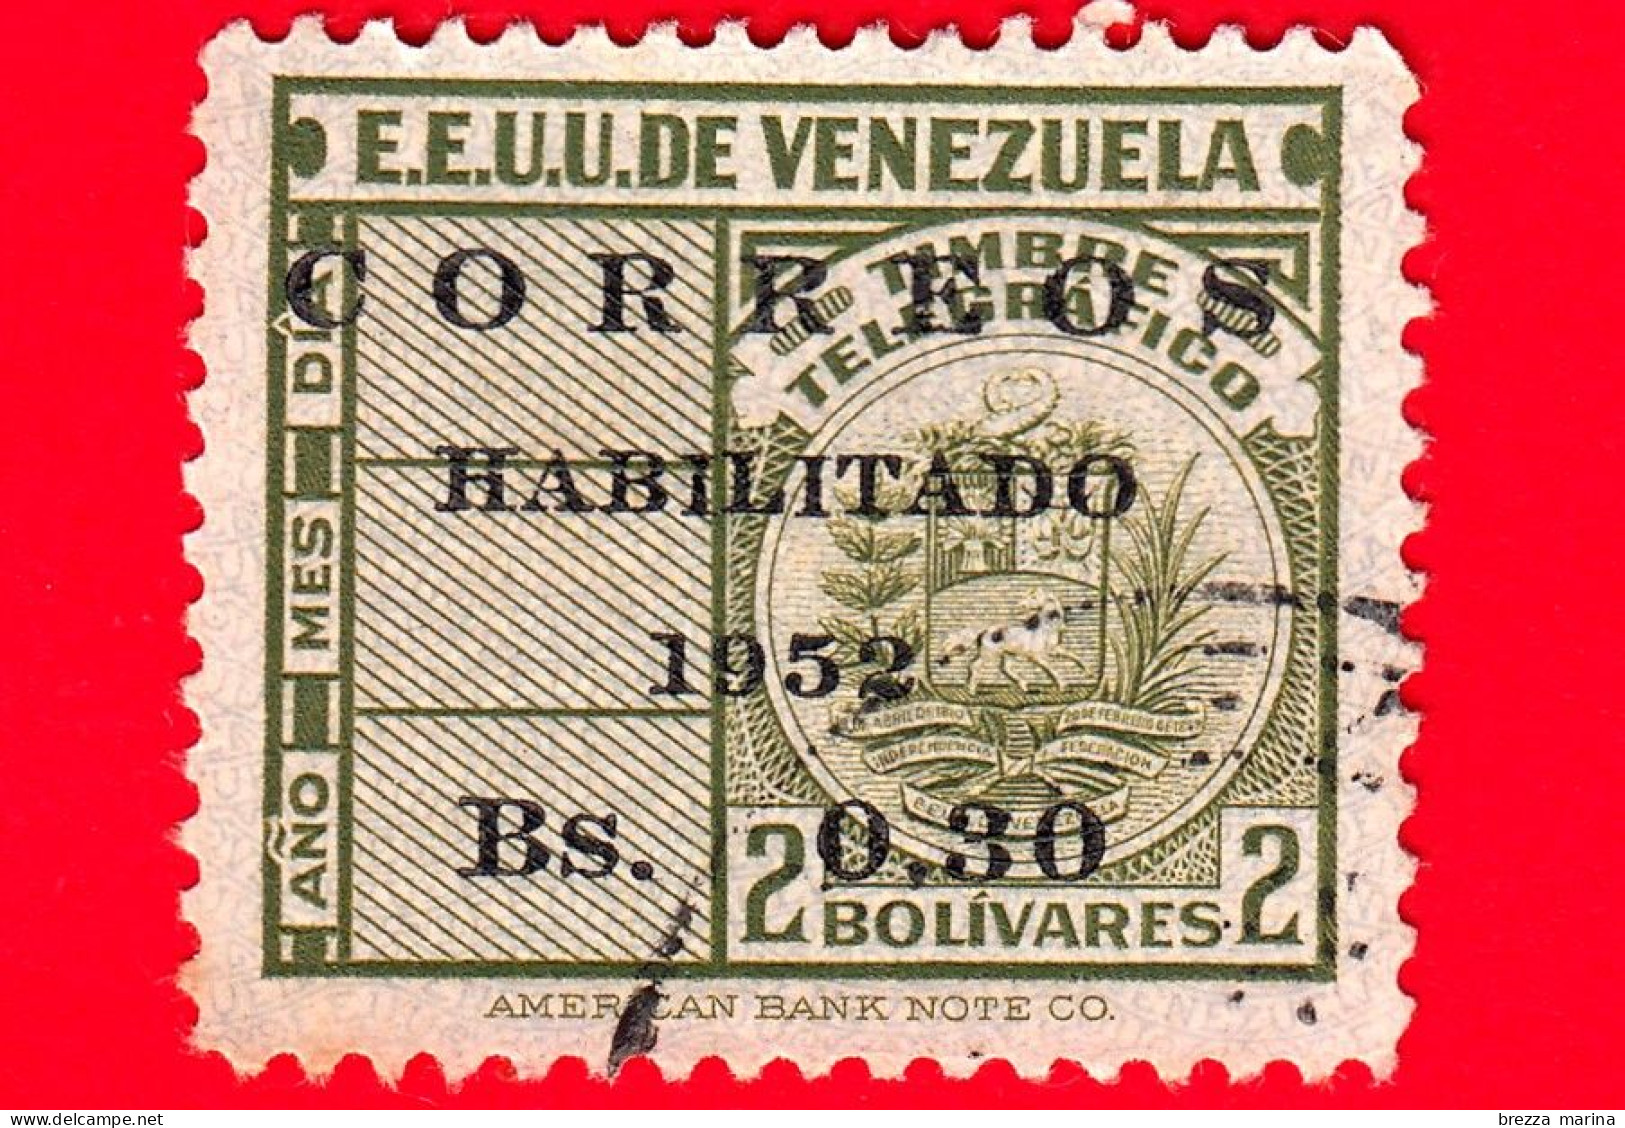 VENEZUELA - Usato - 1952 - Francobolli Telegrafo - Sovrastampa, Correos - Habilitado - 1952 - 0.30 Su 2 - Venezuela